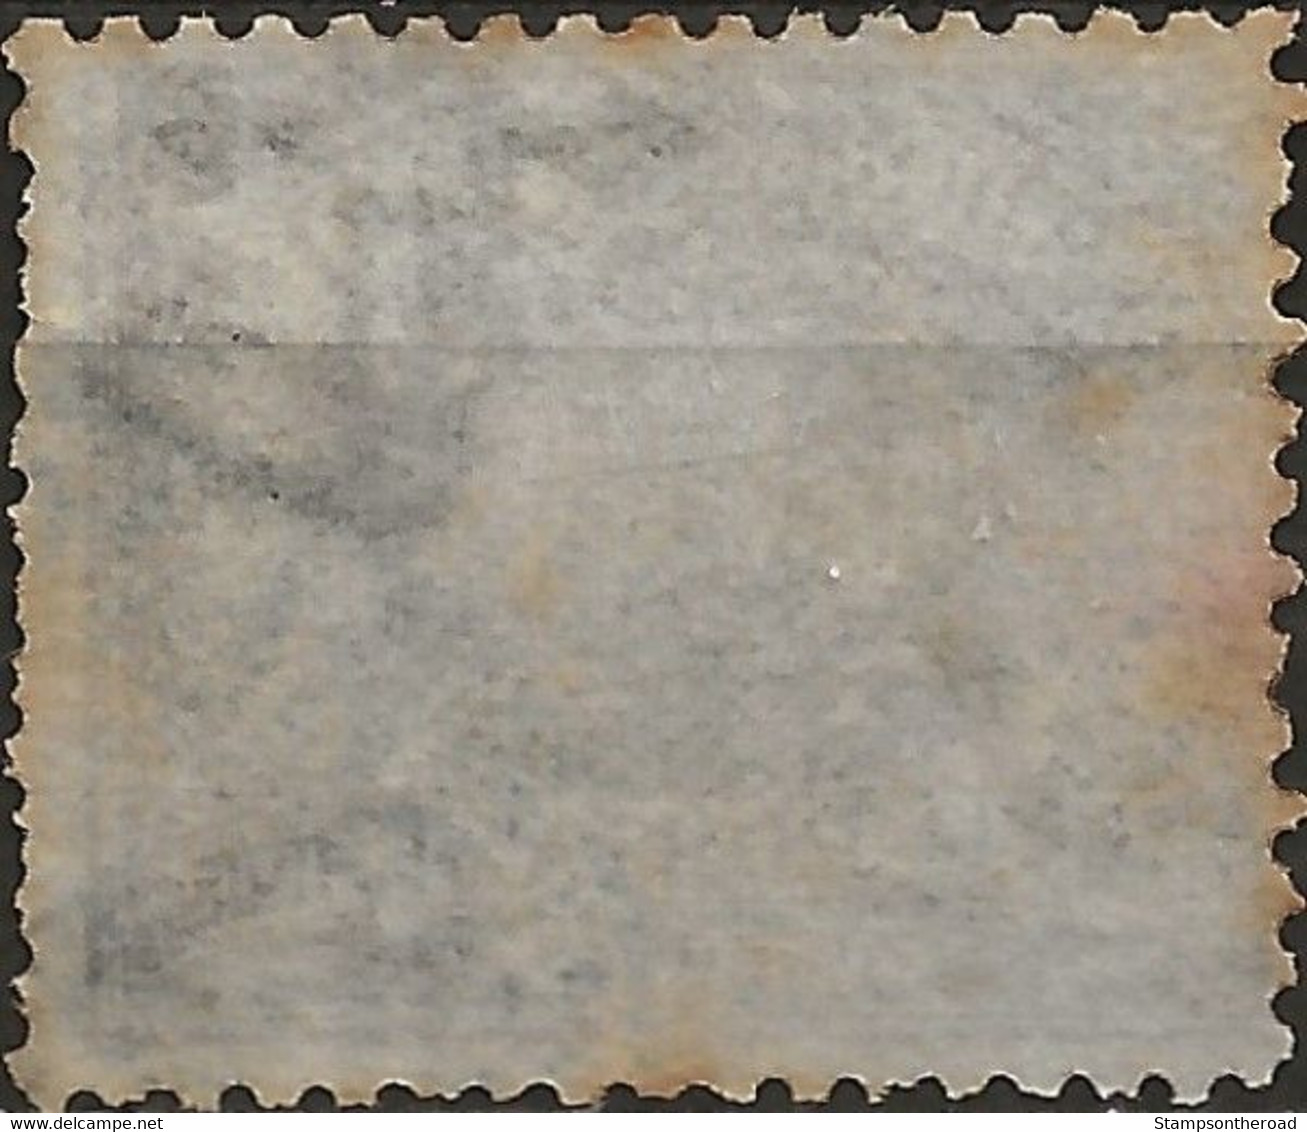 SM17U - San Marino 1892/94, Sassone Nr. 17, 40 Cent. Bruno - Usati